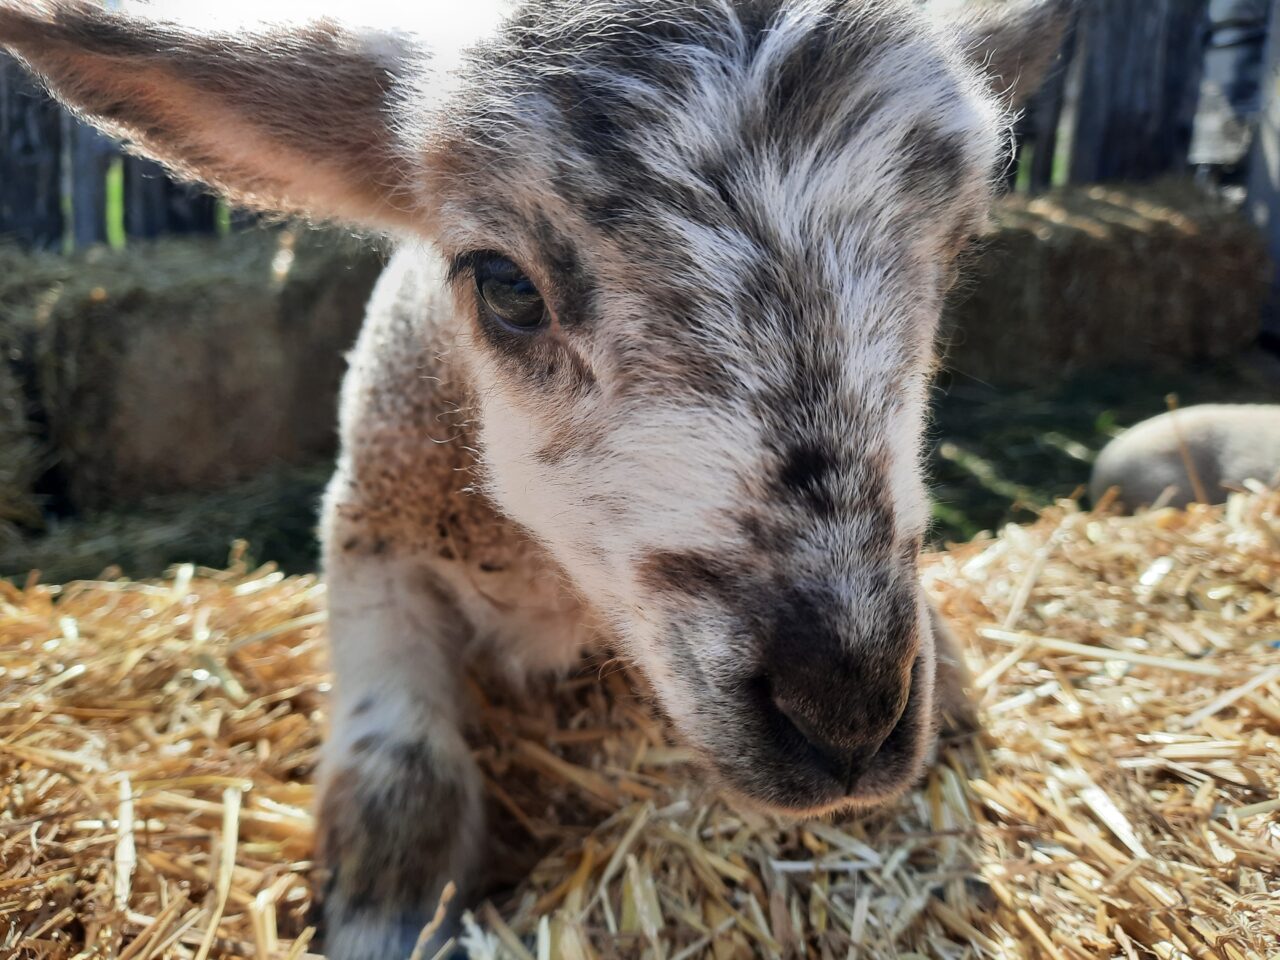 Close up of baby lamb face